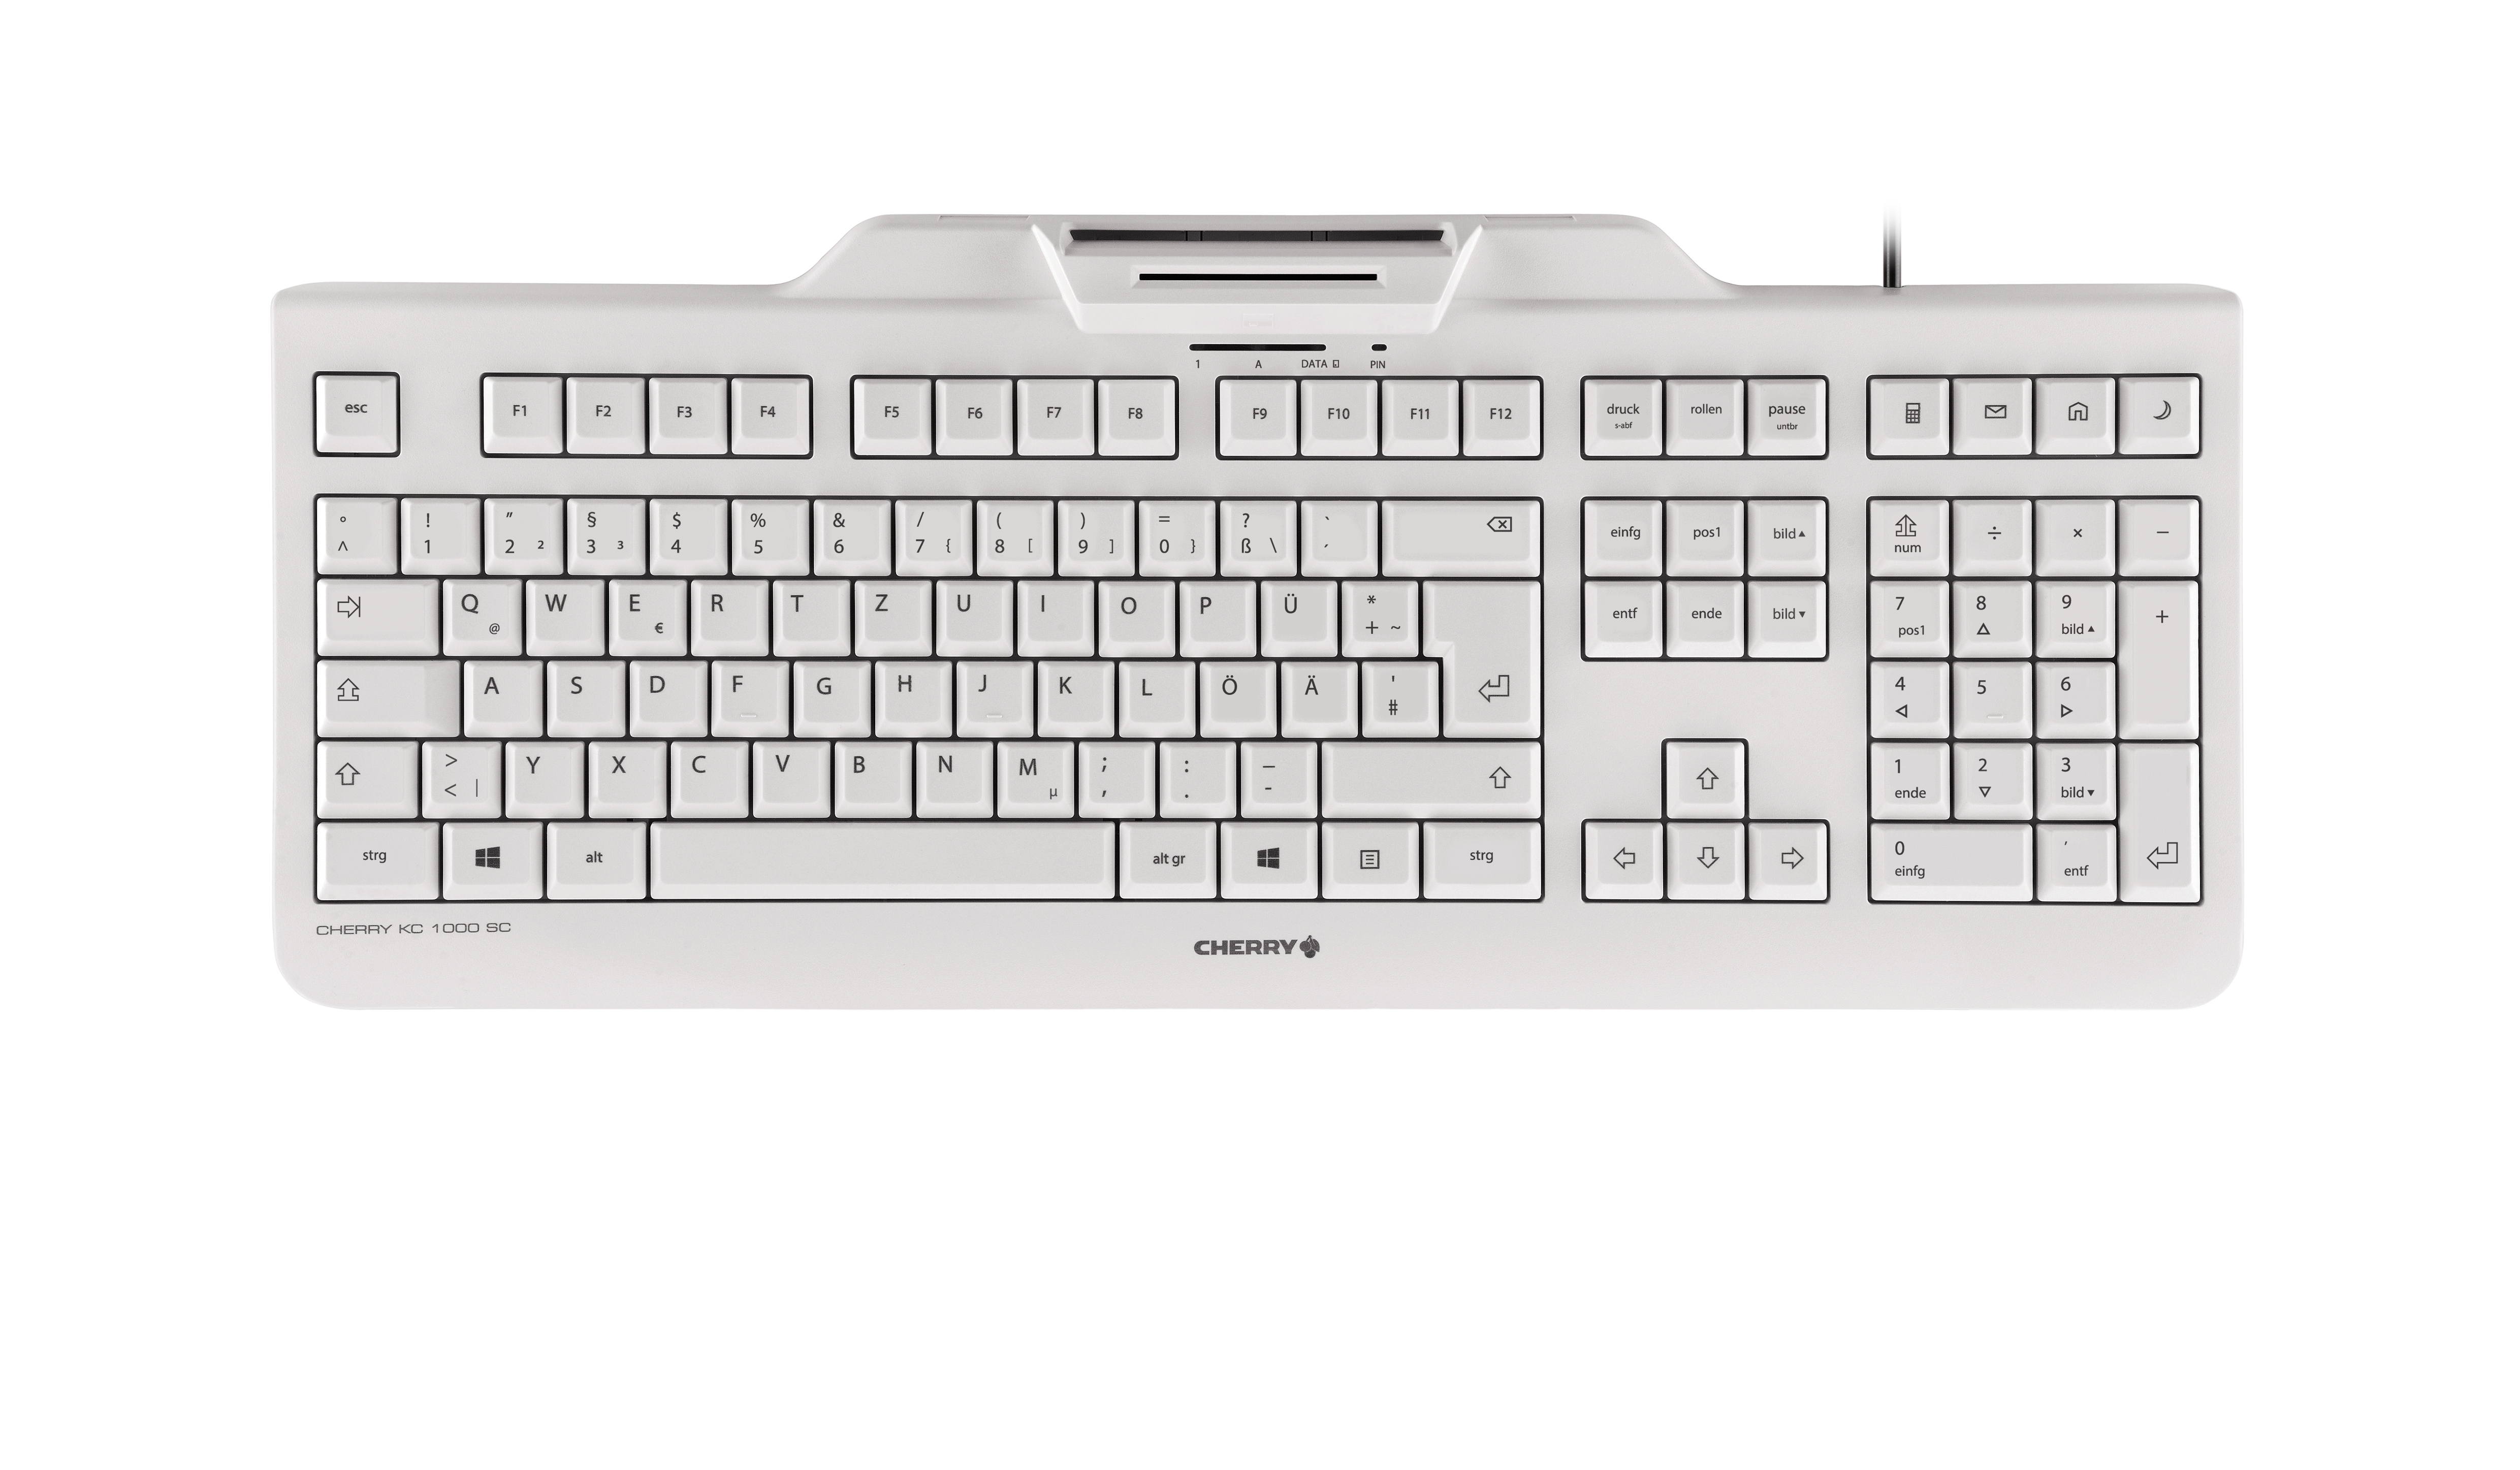 Cherry KC 1000 SC - Tastatur - USB - Pan-Nordic